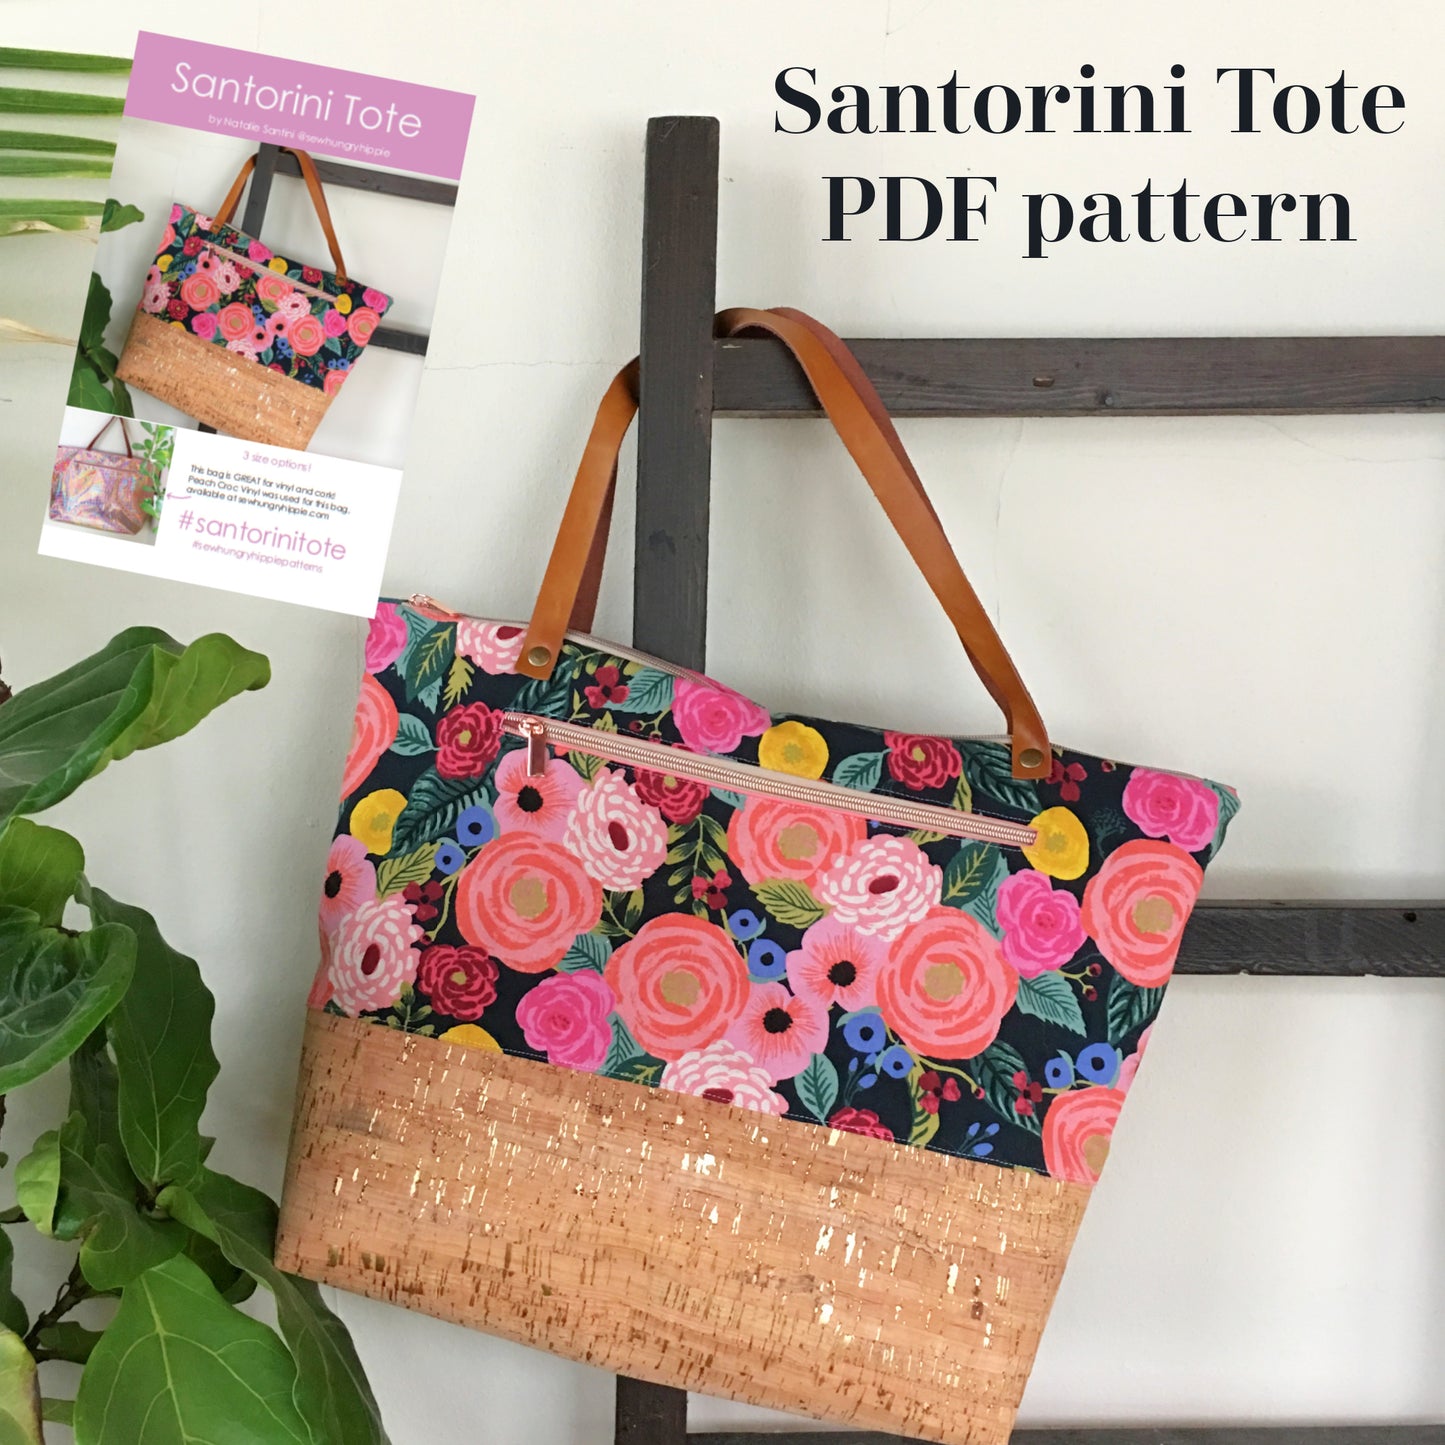 Santorini Tote PDF Pattern